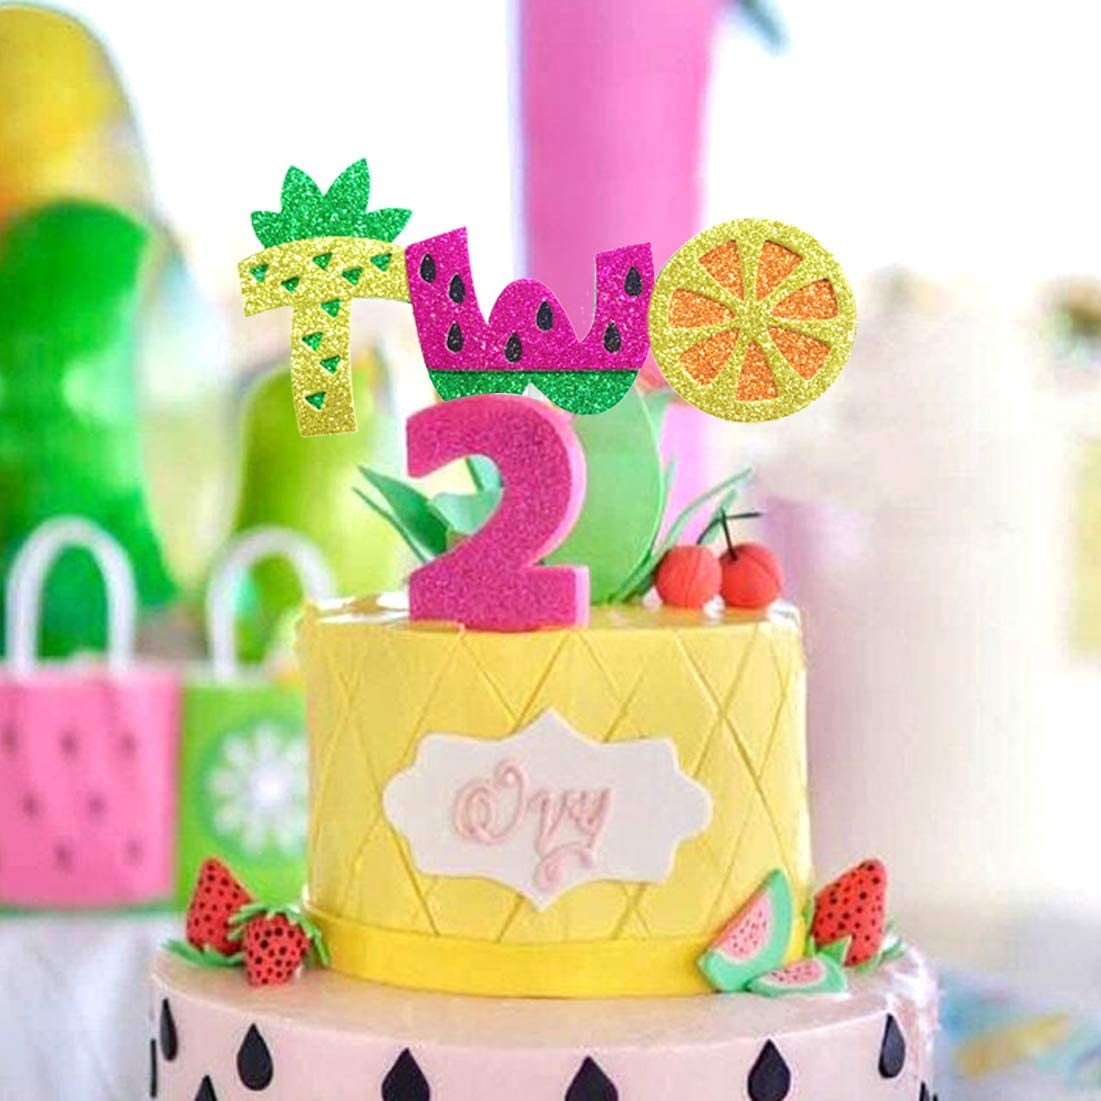 Cake shop MOCART  Summer happinesstutti frutti happy birthday cake   Facebook